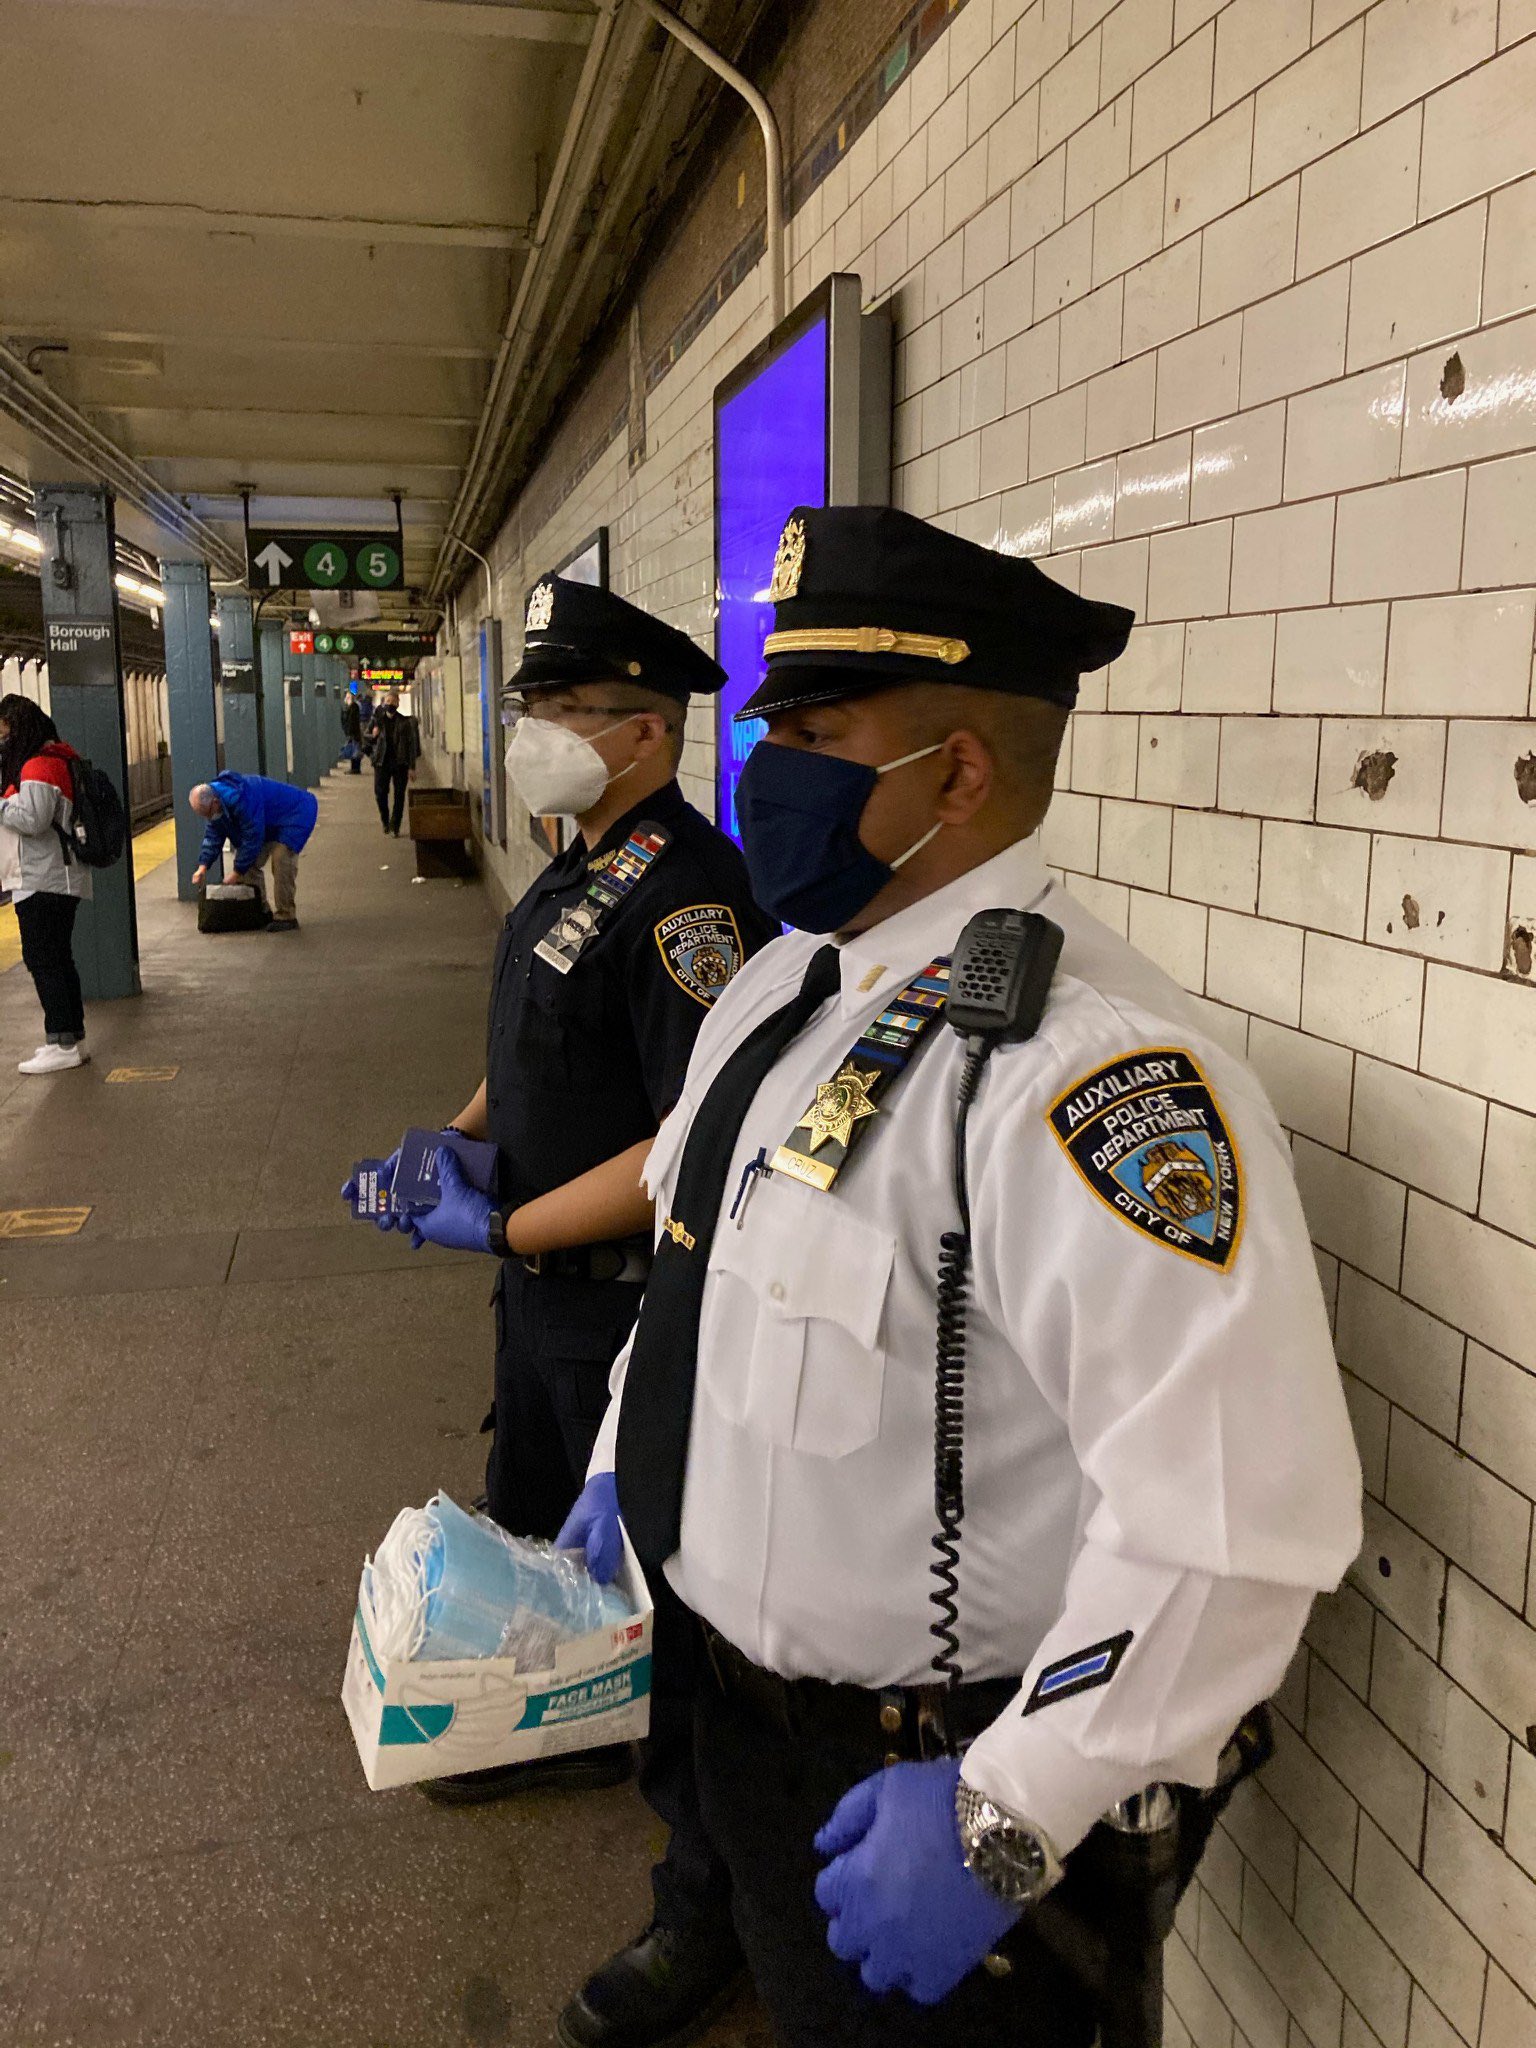 Nypdが予備警察官補を増員 地下鉄で犯罪取り締まり強化 Dailysun New York